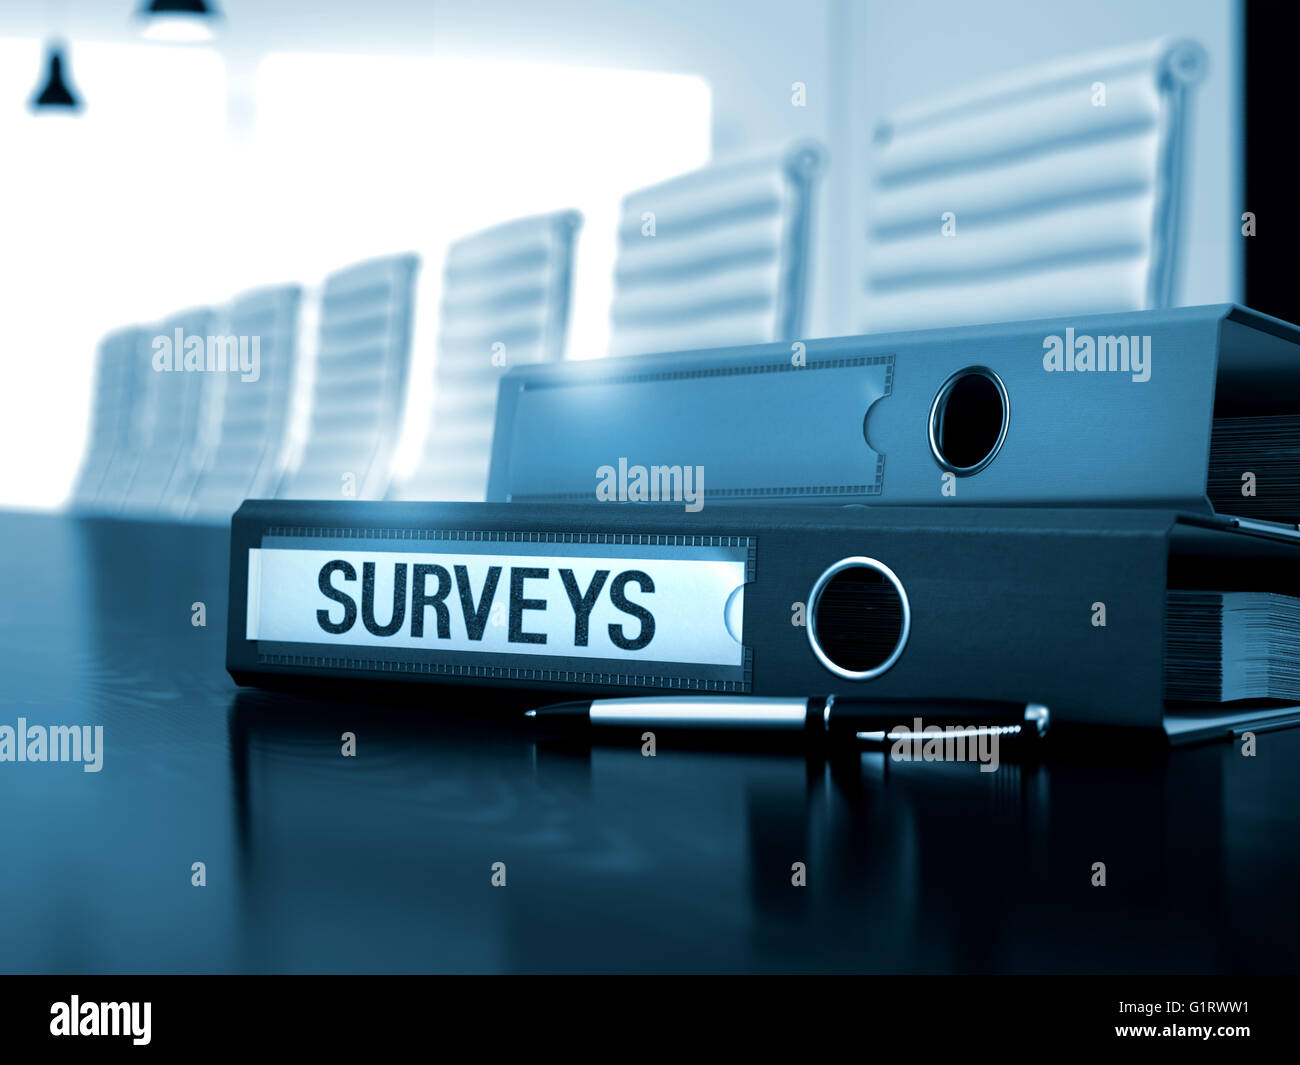 Surveys on Ring Binder. Blurred Image. Stock Photo